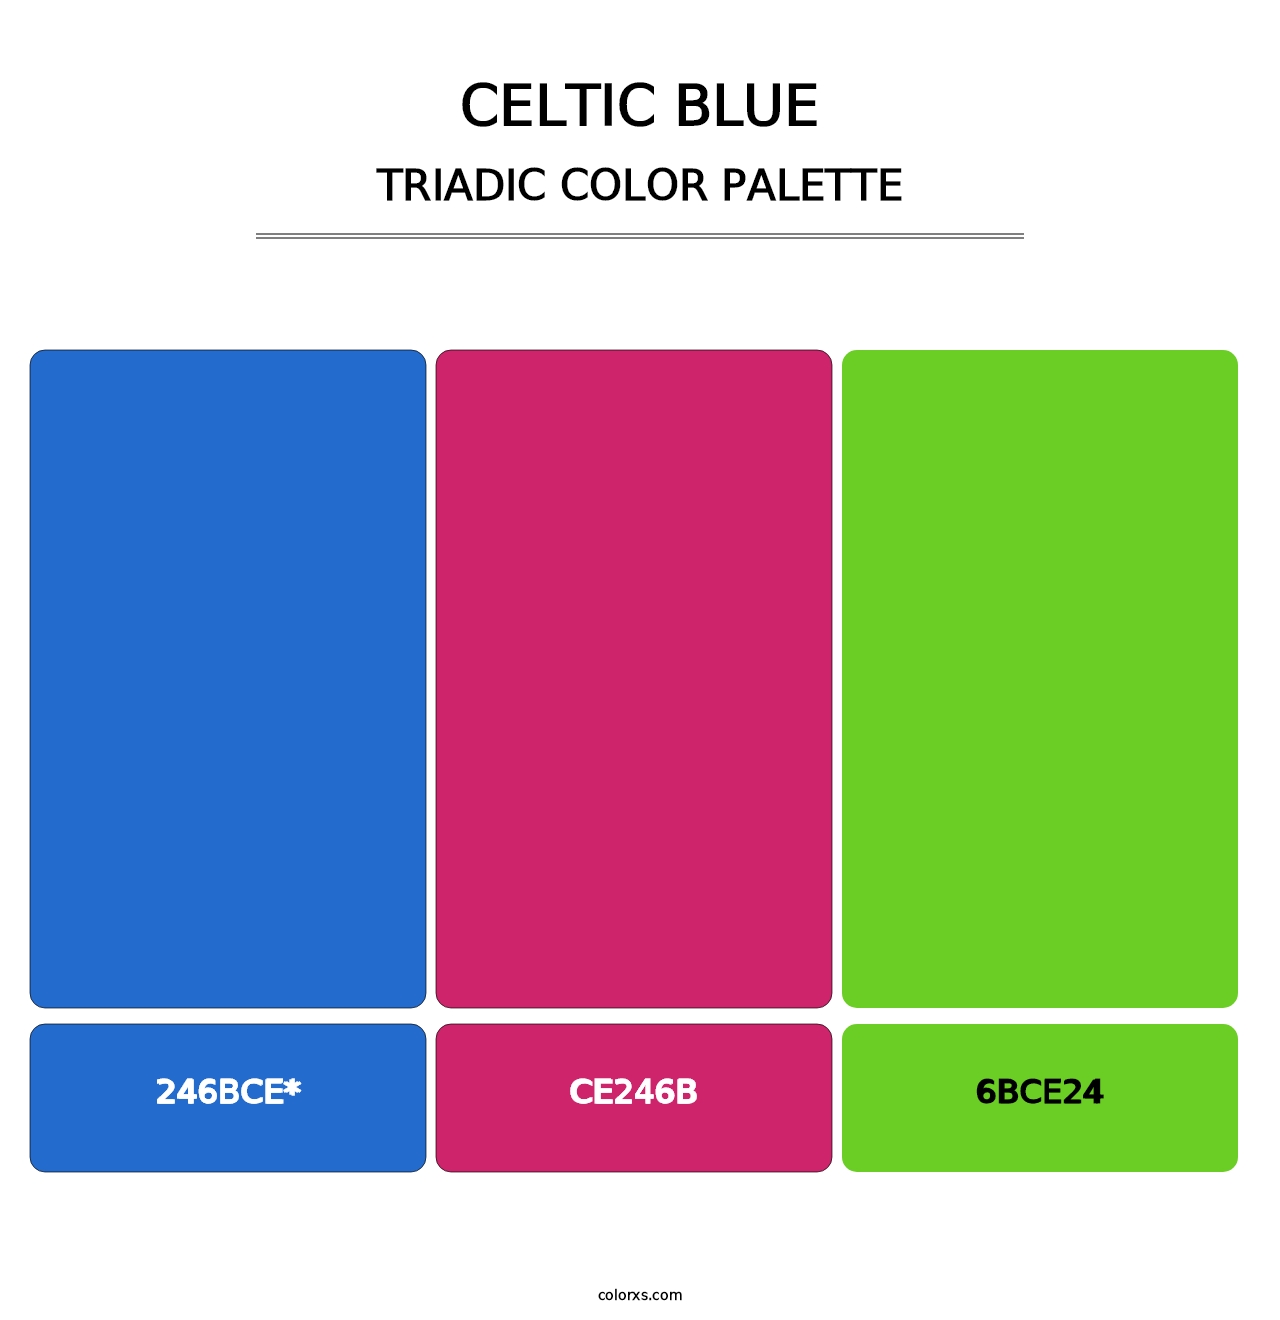 Celtic Blue - Triadic Color Palette